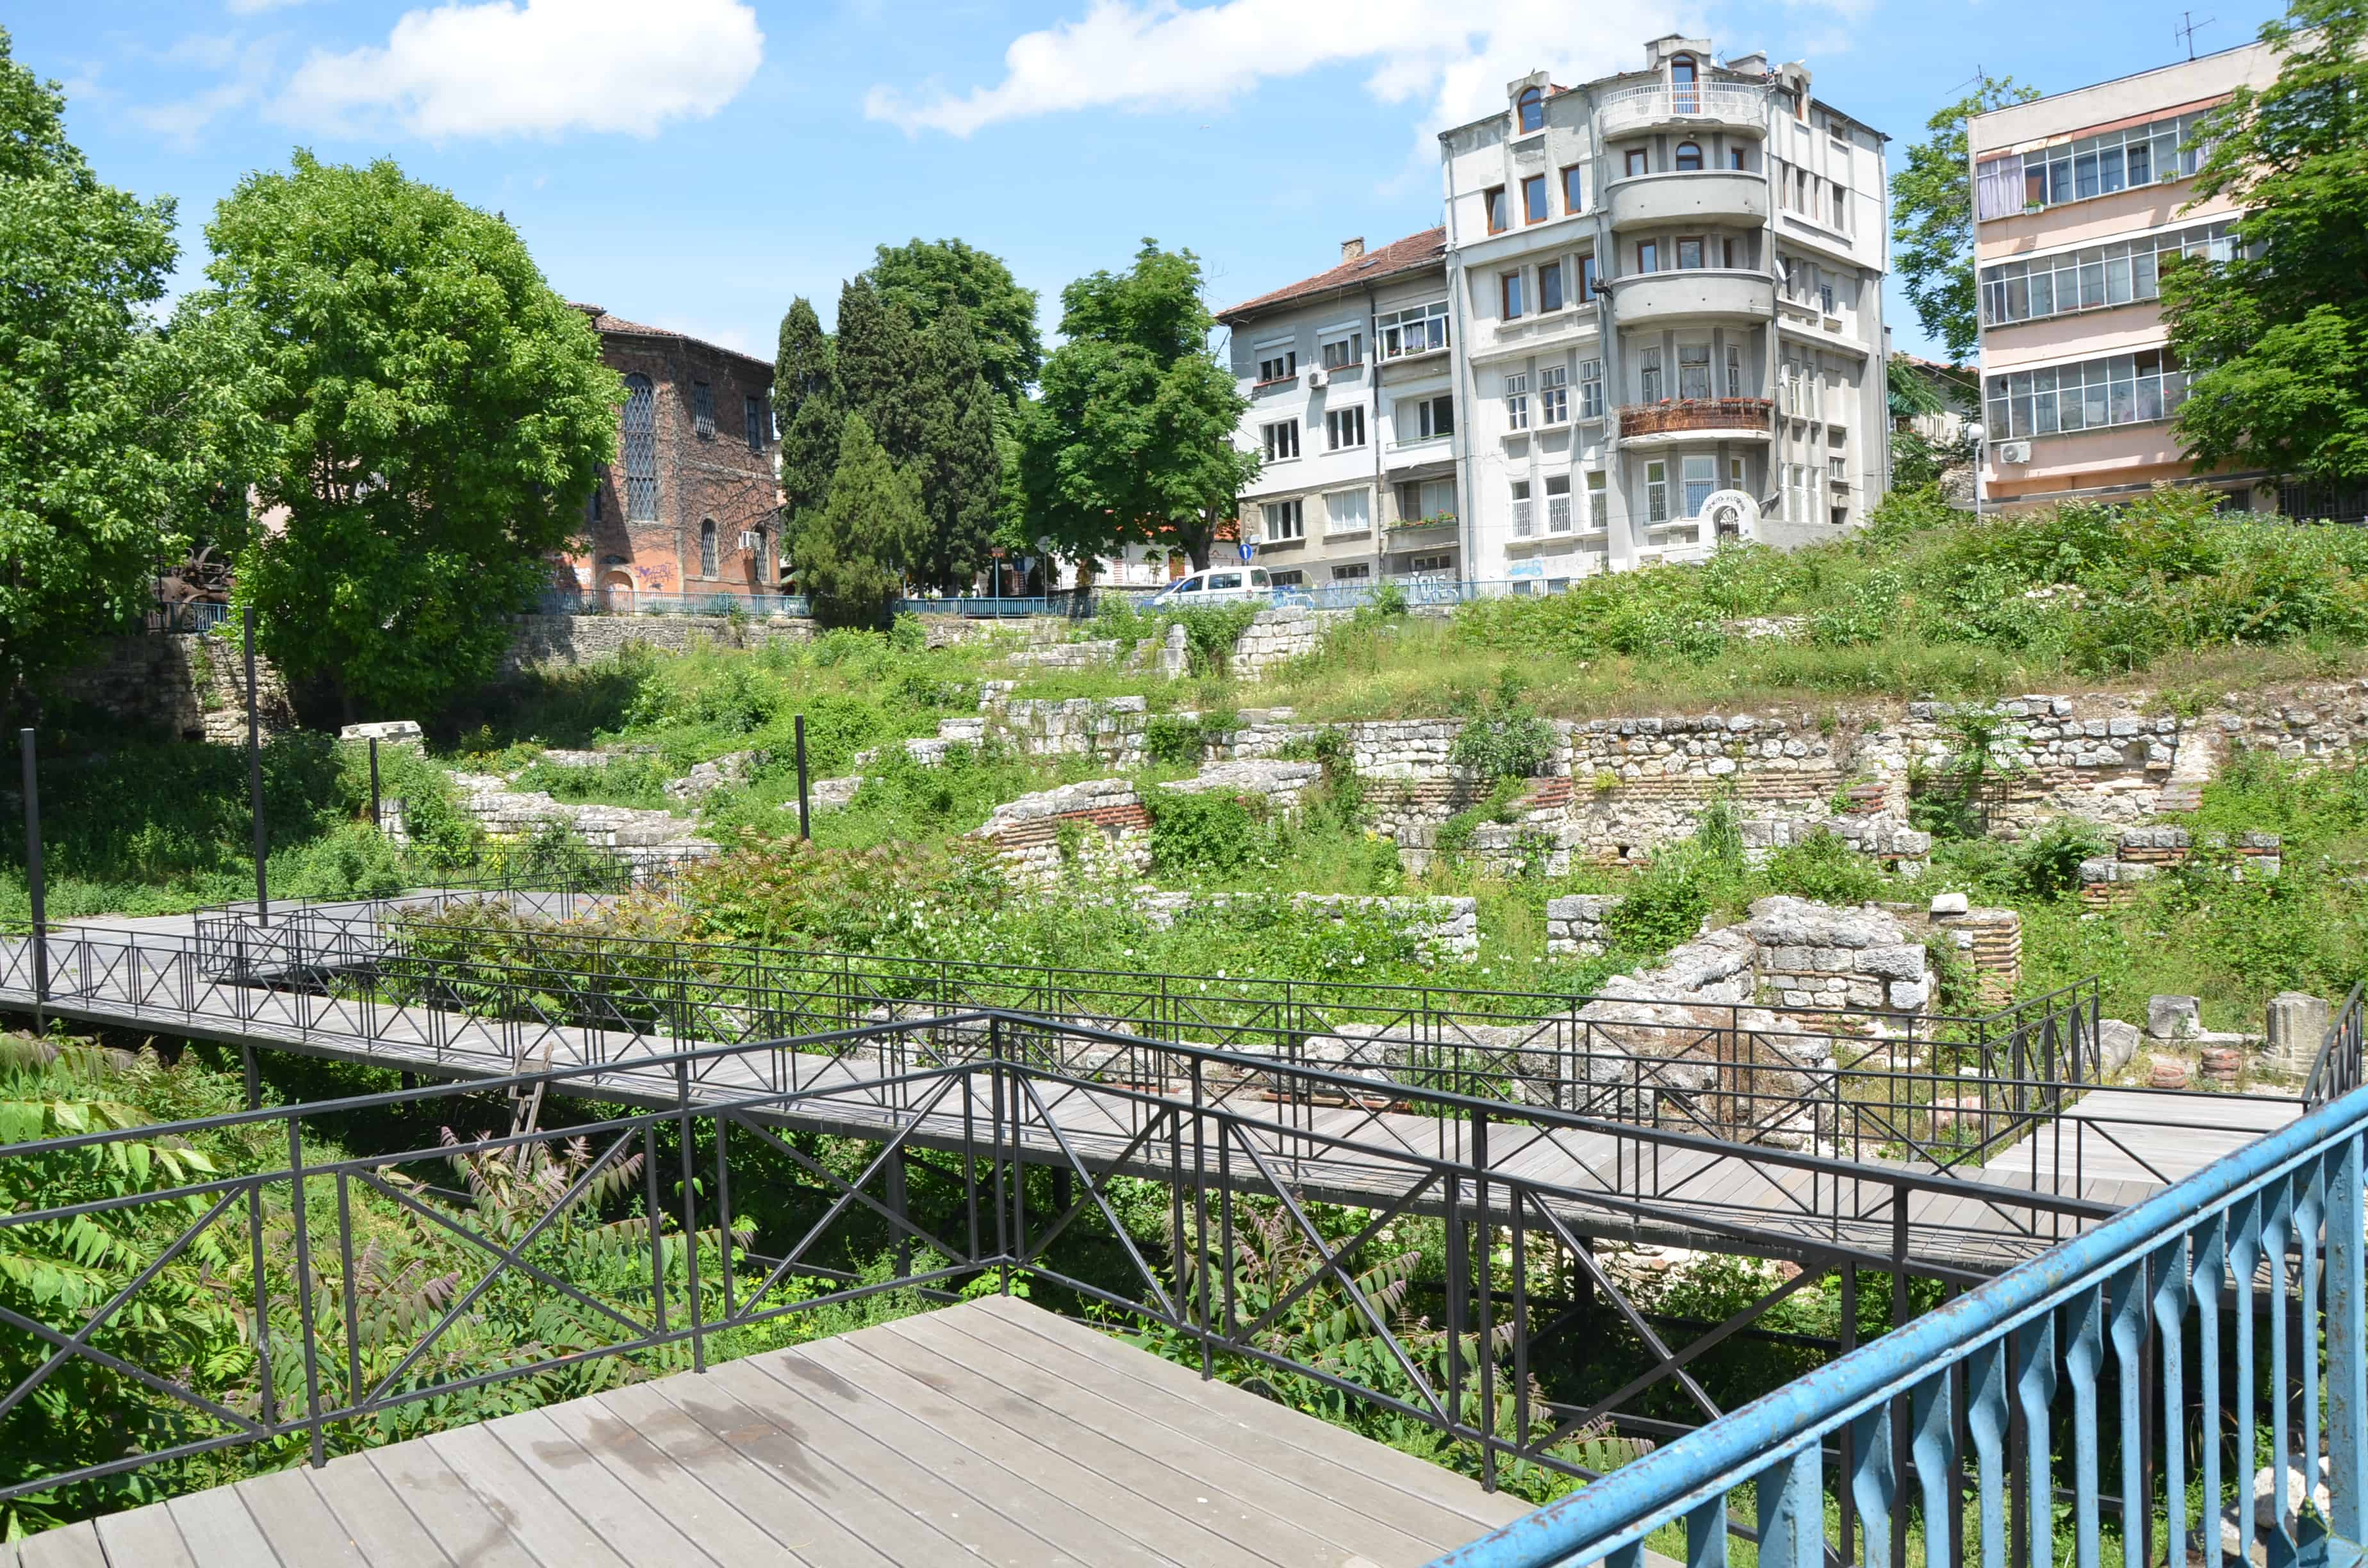 Roman baths near the City History Museum in Varna, Bulgaria